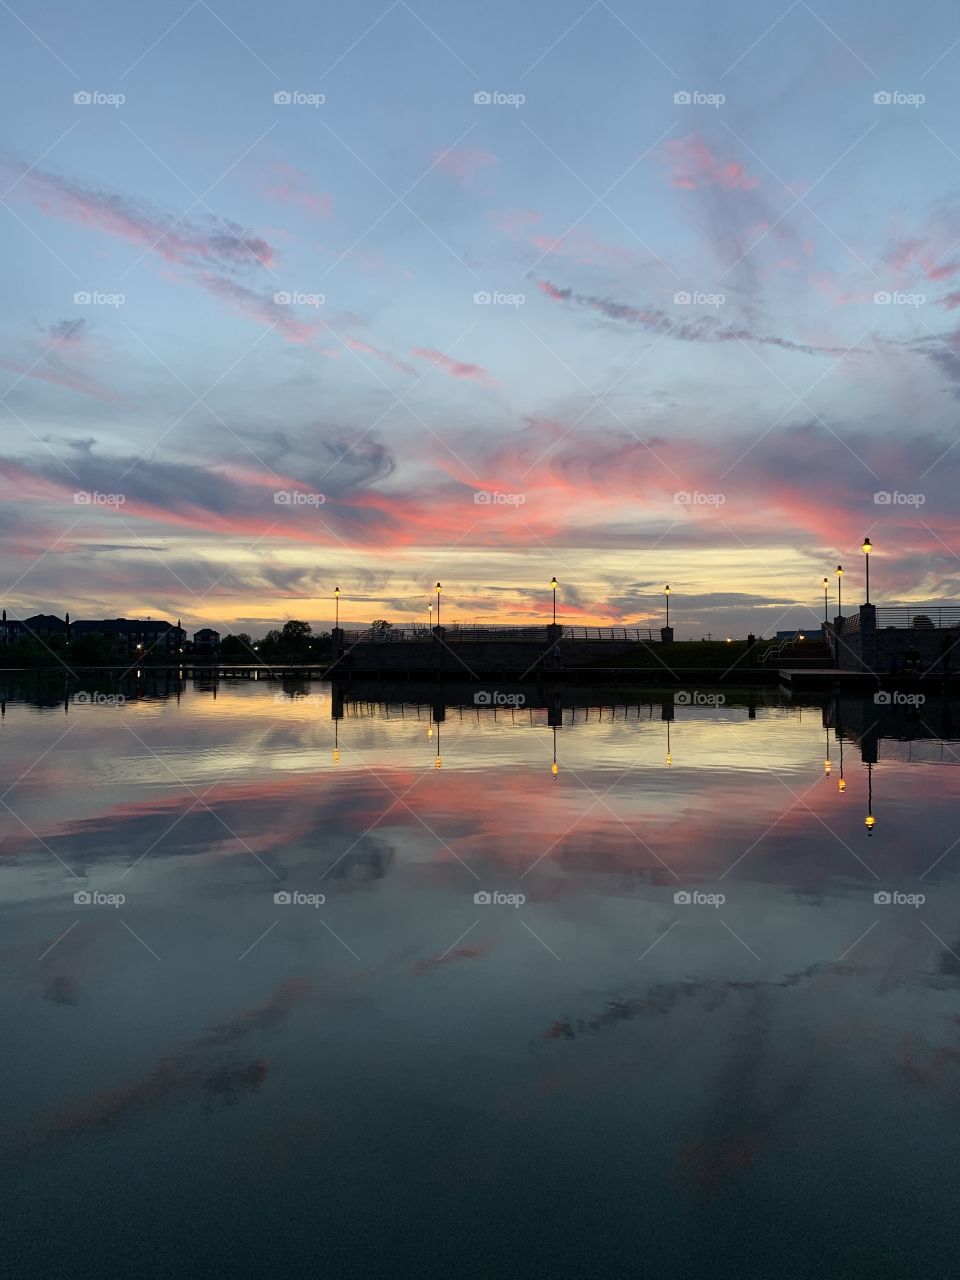 A beautiful, vivid sunset over a lake